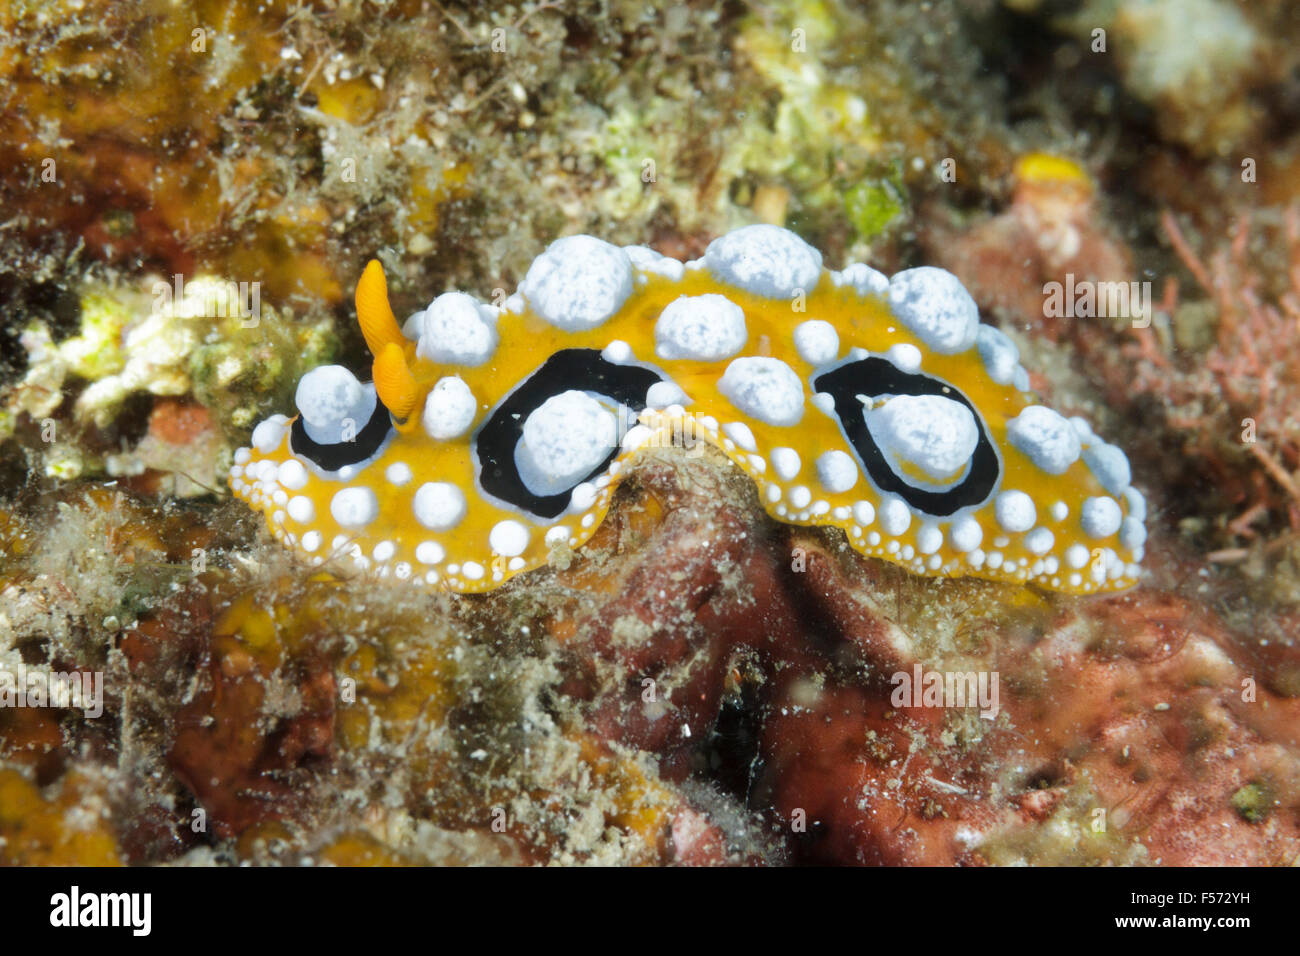 Phyllidia ocellata nudibranch, Lembeh Strait, Indonesia Stock Photo